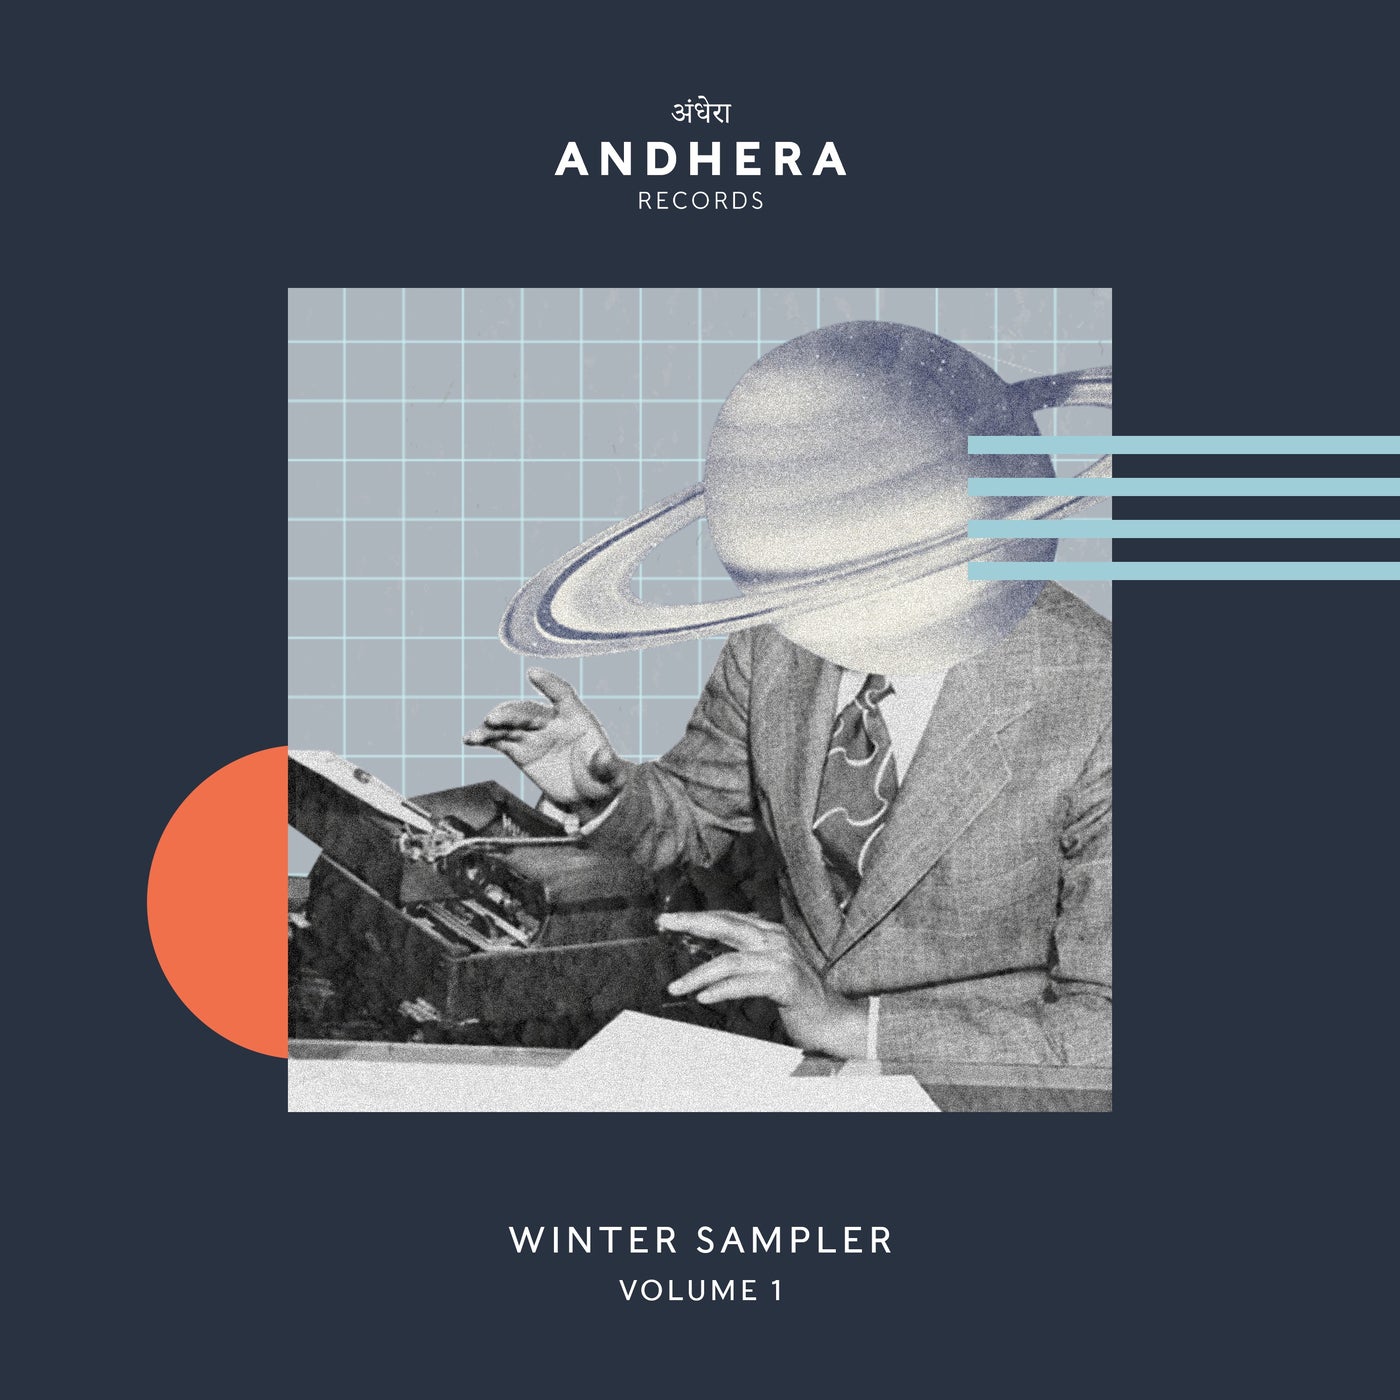 Andhera Records Winter Sampler Volume 1